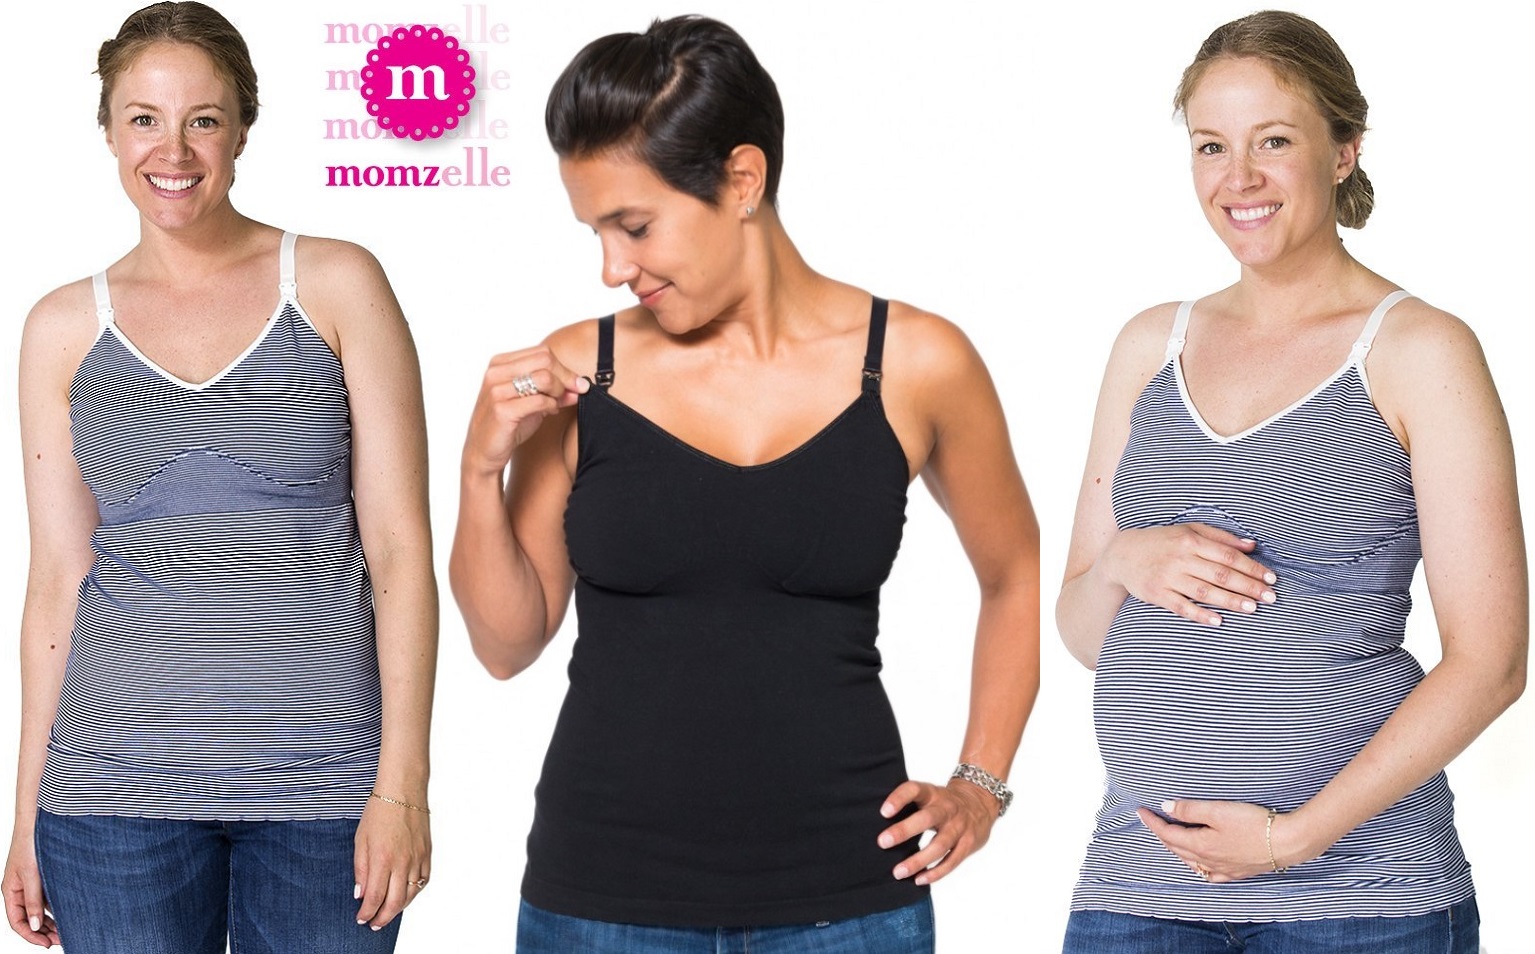 Medela Comfy Cami Bra for Maternity/Breastfeeding, Black, XL